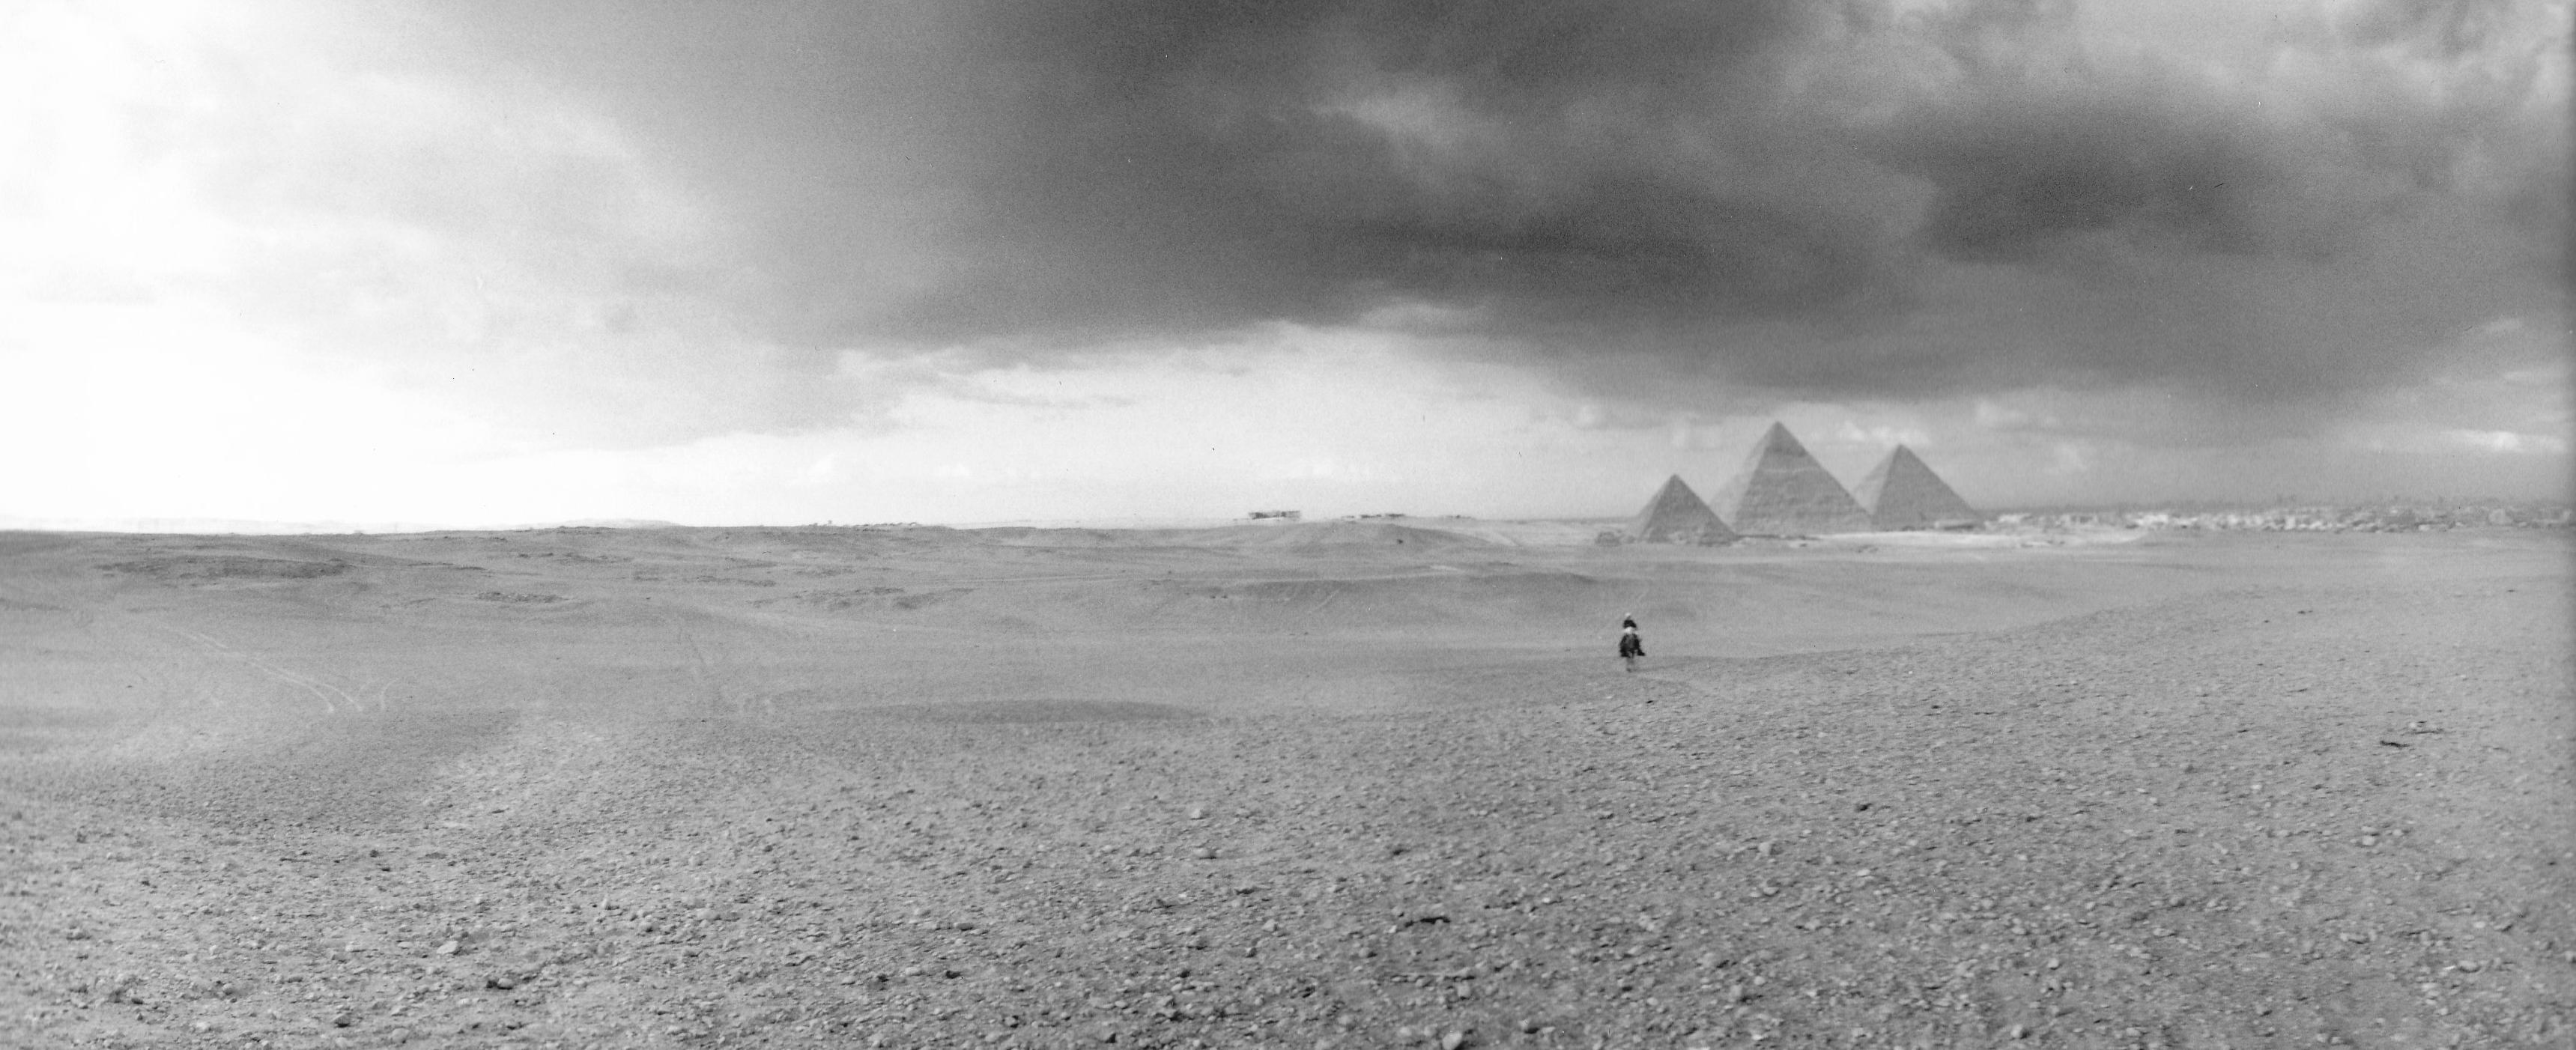 Paul Greenberg Portrait Photograph - Rain Clouds over Pyramids, Giza, Egypt